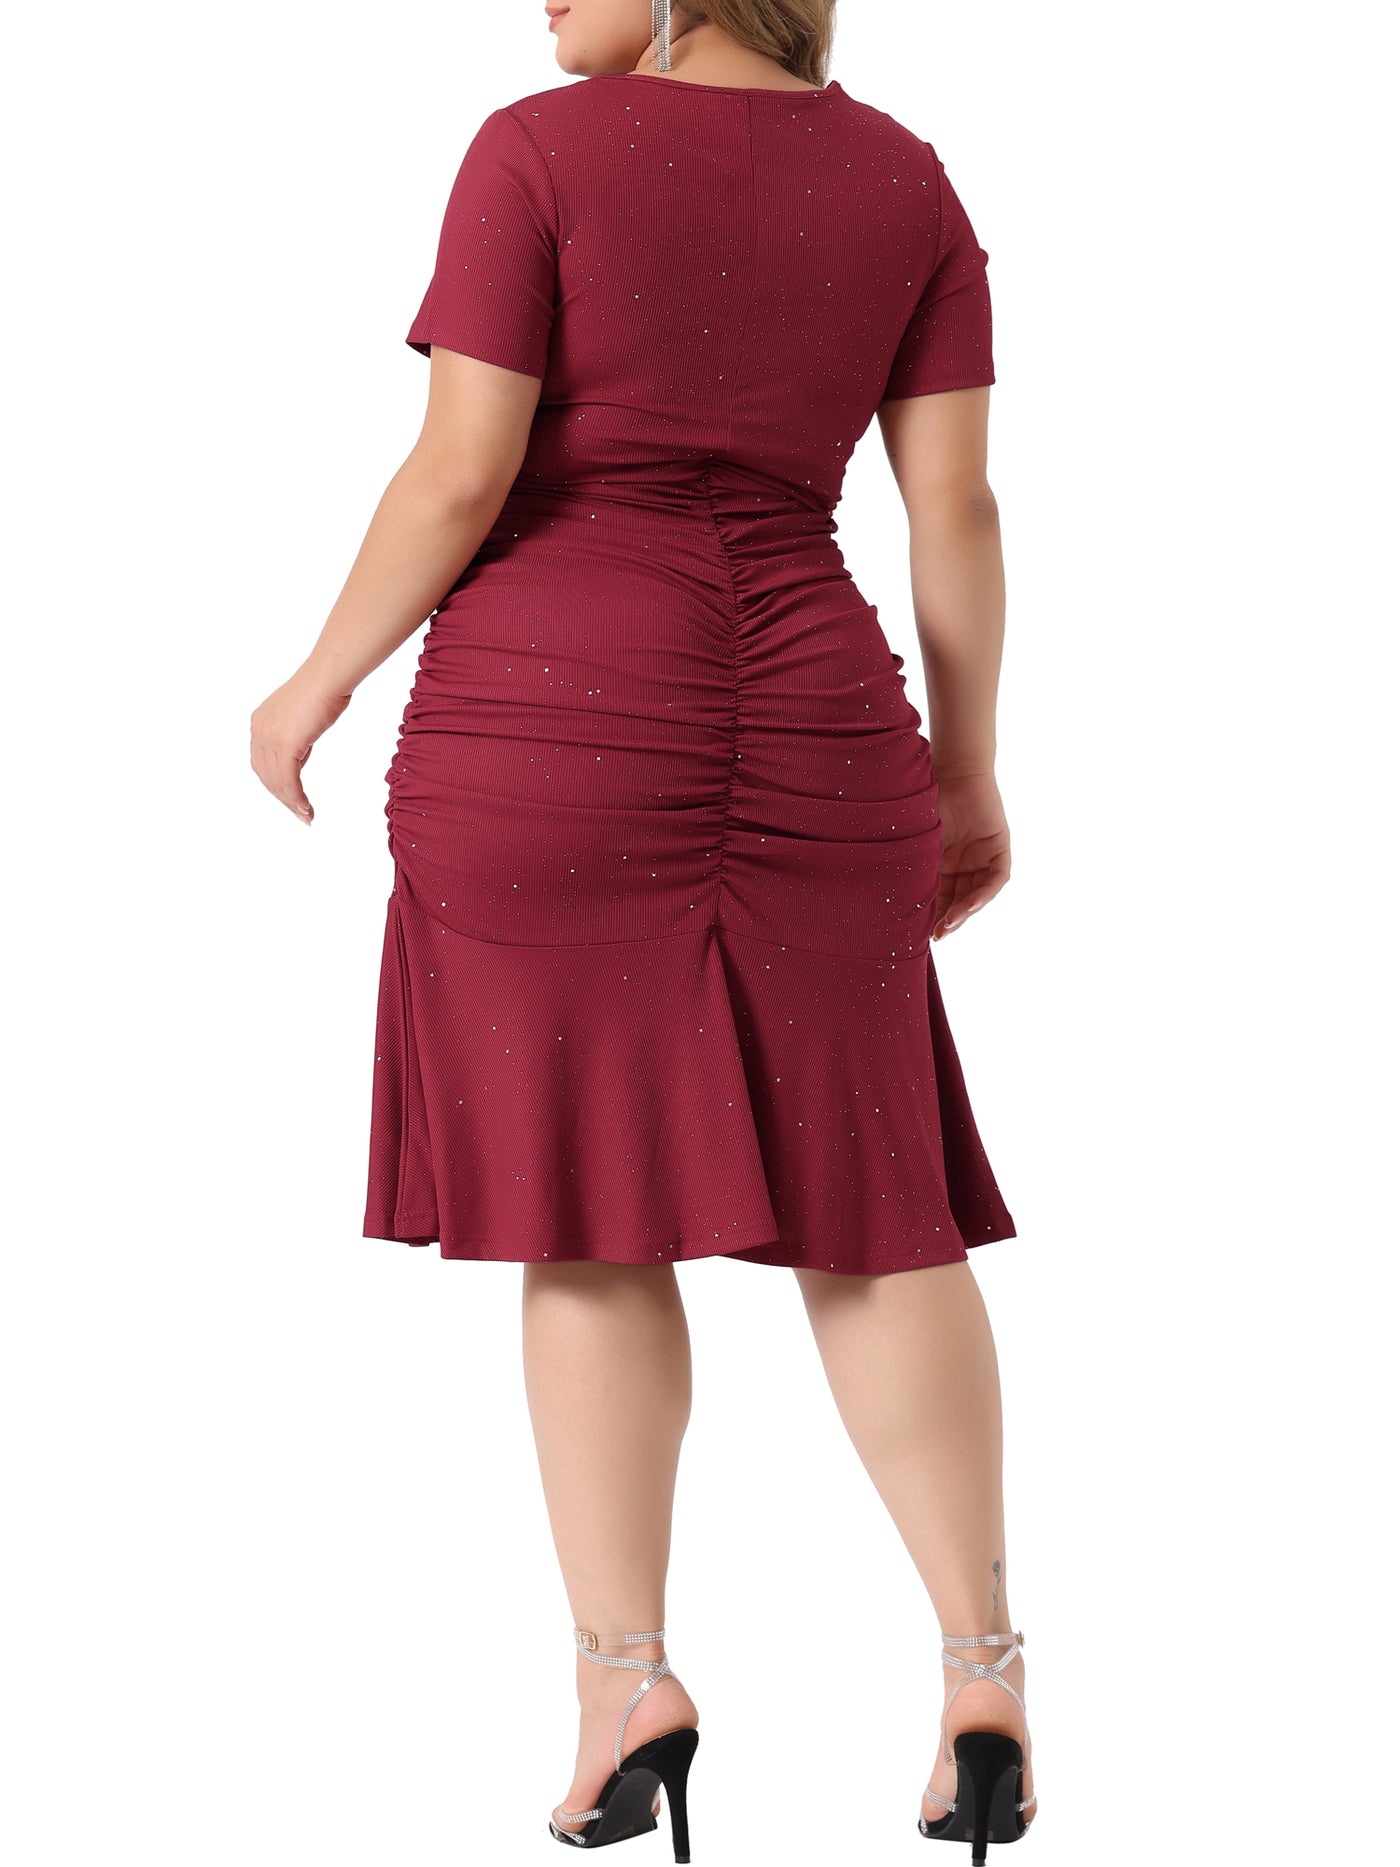 Bublédon Plus Size Dress for Women Ruffle Hem V Neck Short Sleeve Sequin Ruched Dresses